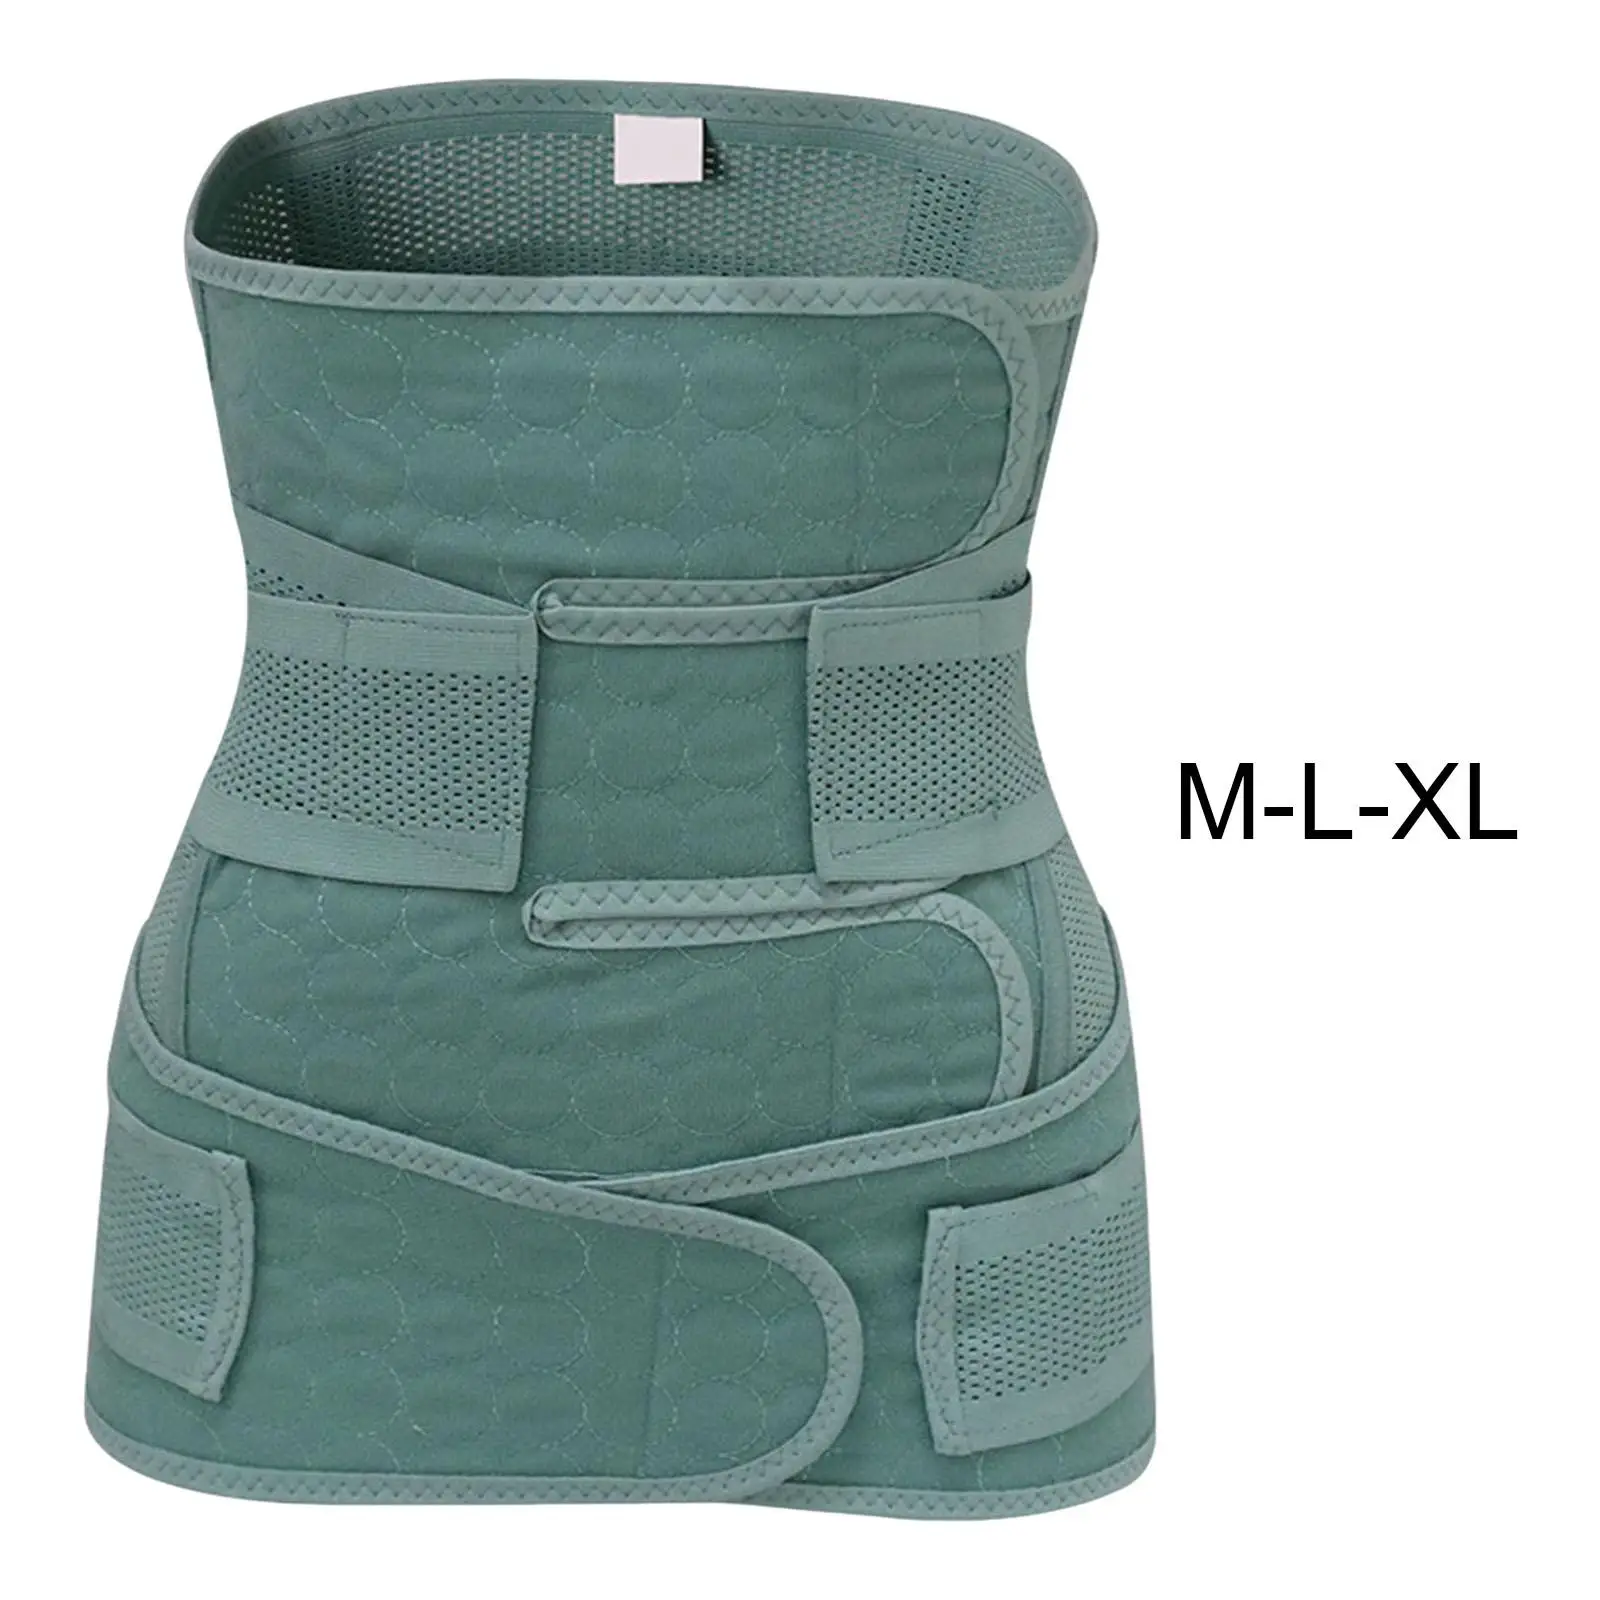 Postpartum Support Multipurpose Soft Adjustable Durable Waist Trimmer Belt for Office Workout Postpartum Recovery Work Walking